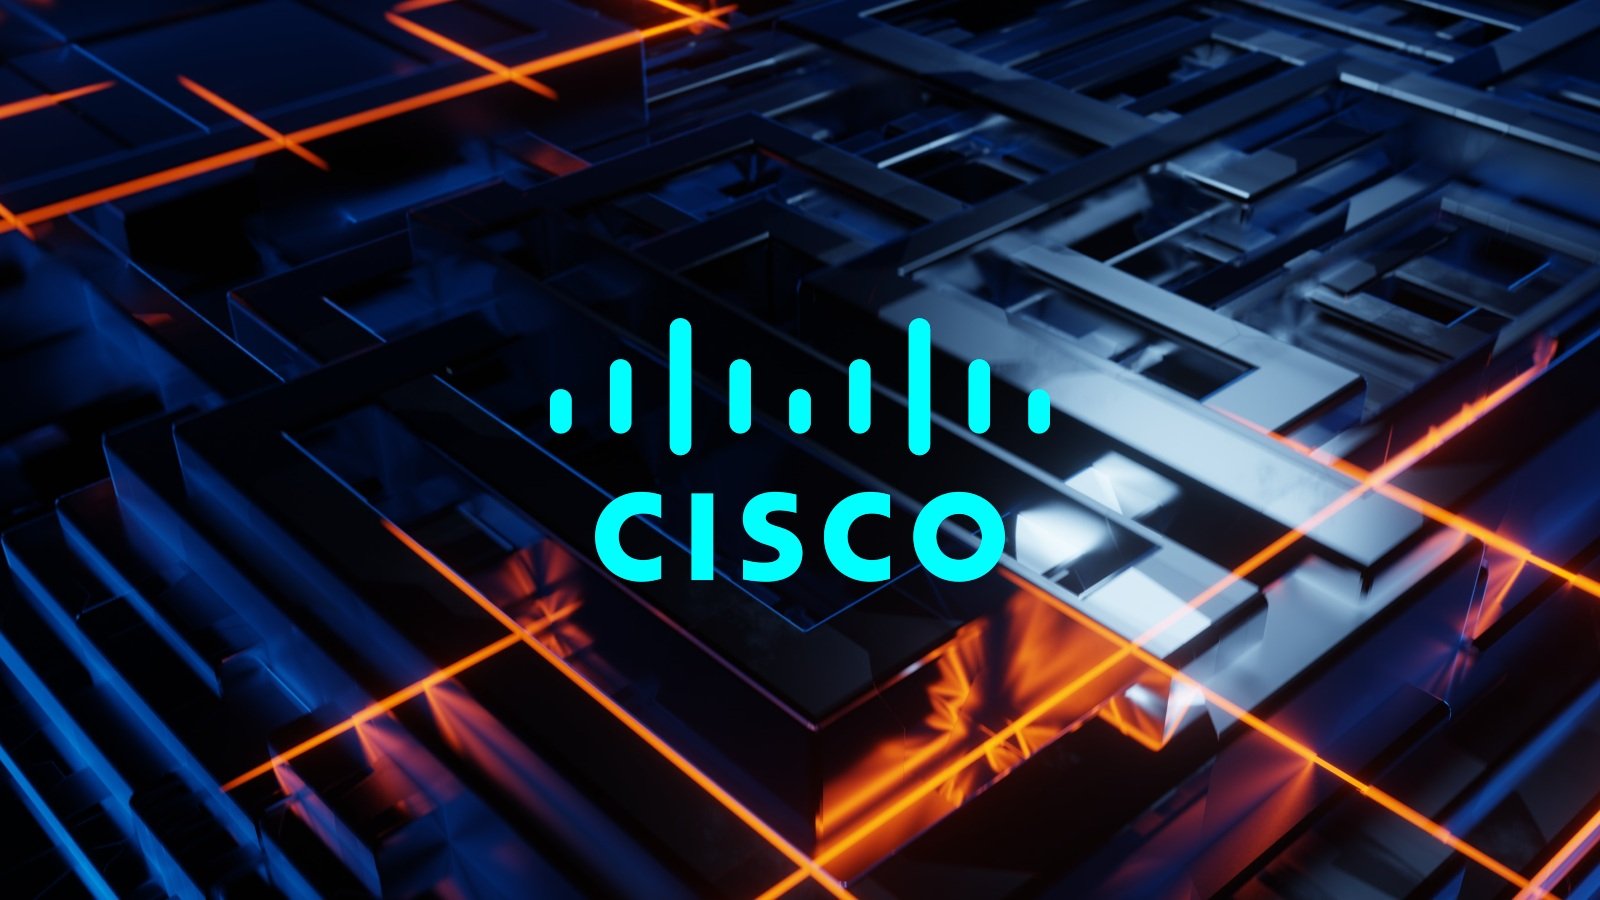 Cisco warns of VPN zero-day exploited by ransomware gangs – Source: www.bleepingcomputer.com